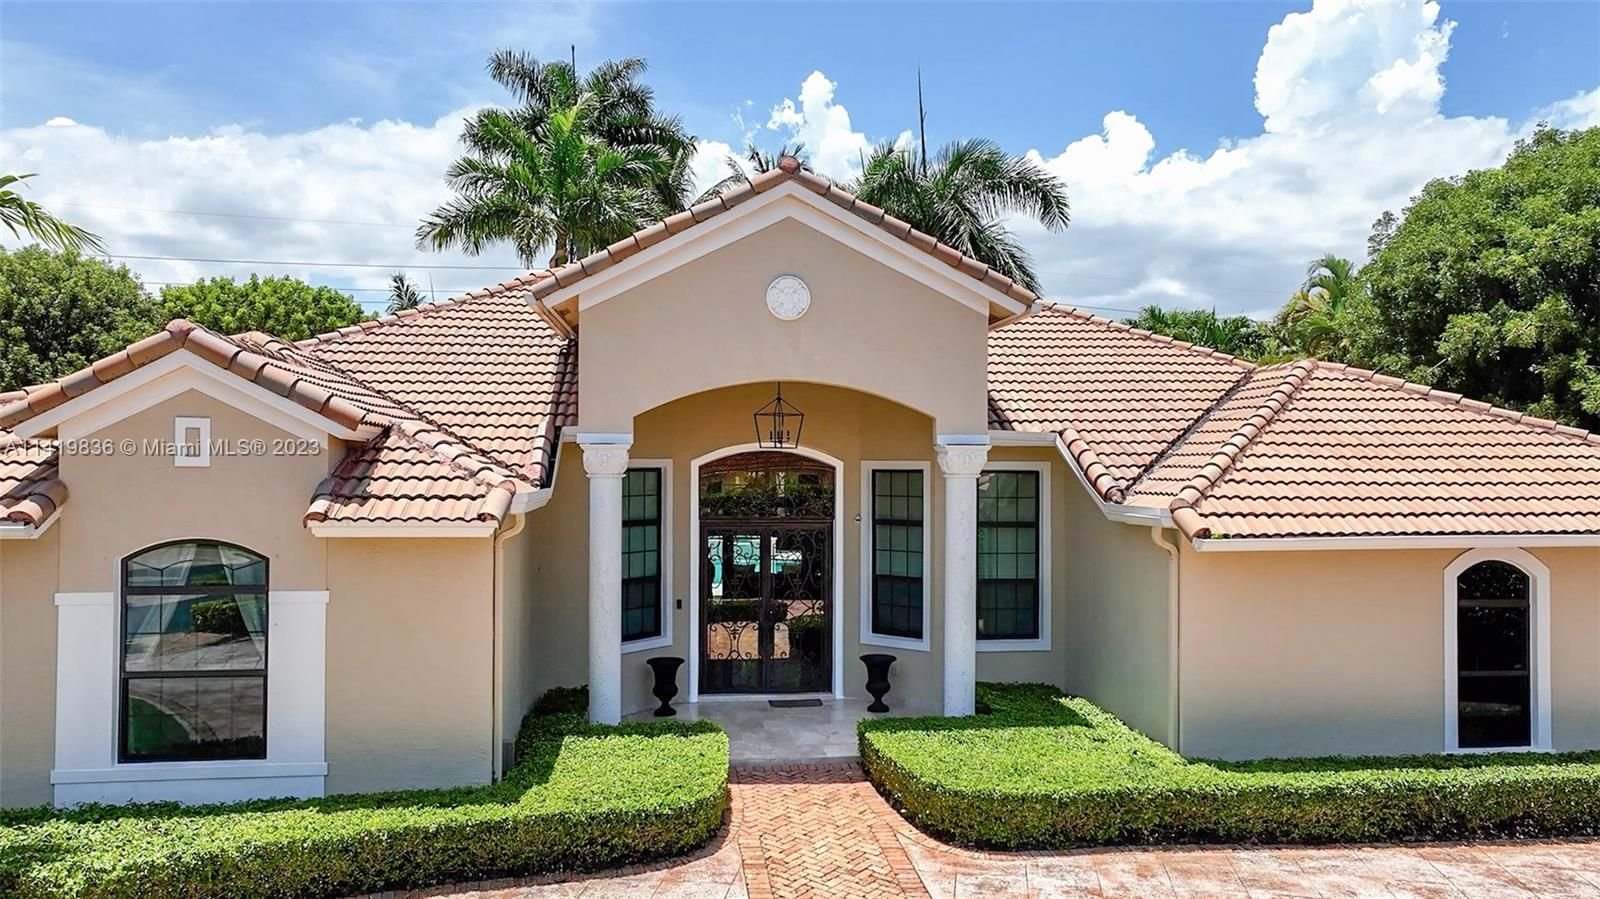 Real estate property located at 8631 166th St, Miami-Dade County, Palmetto Bay, FL